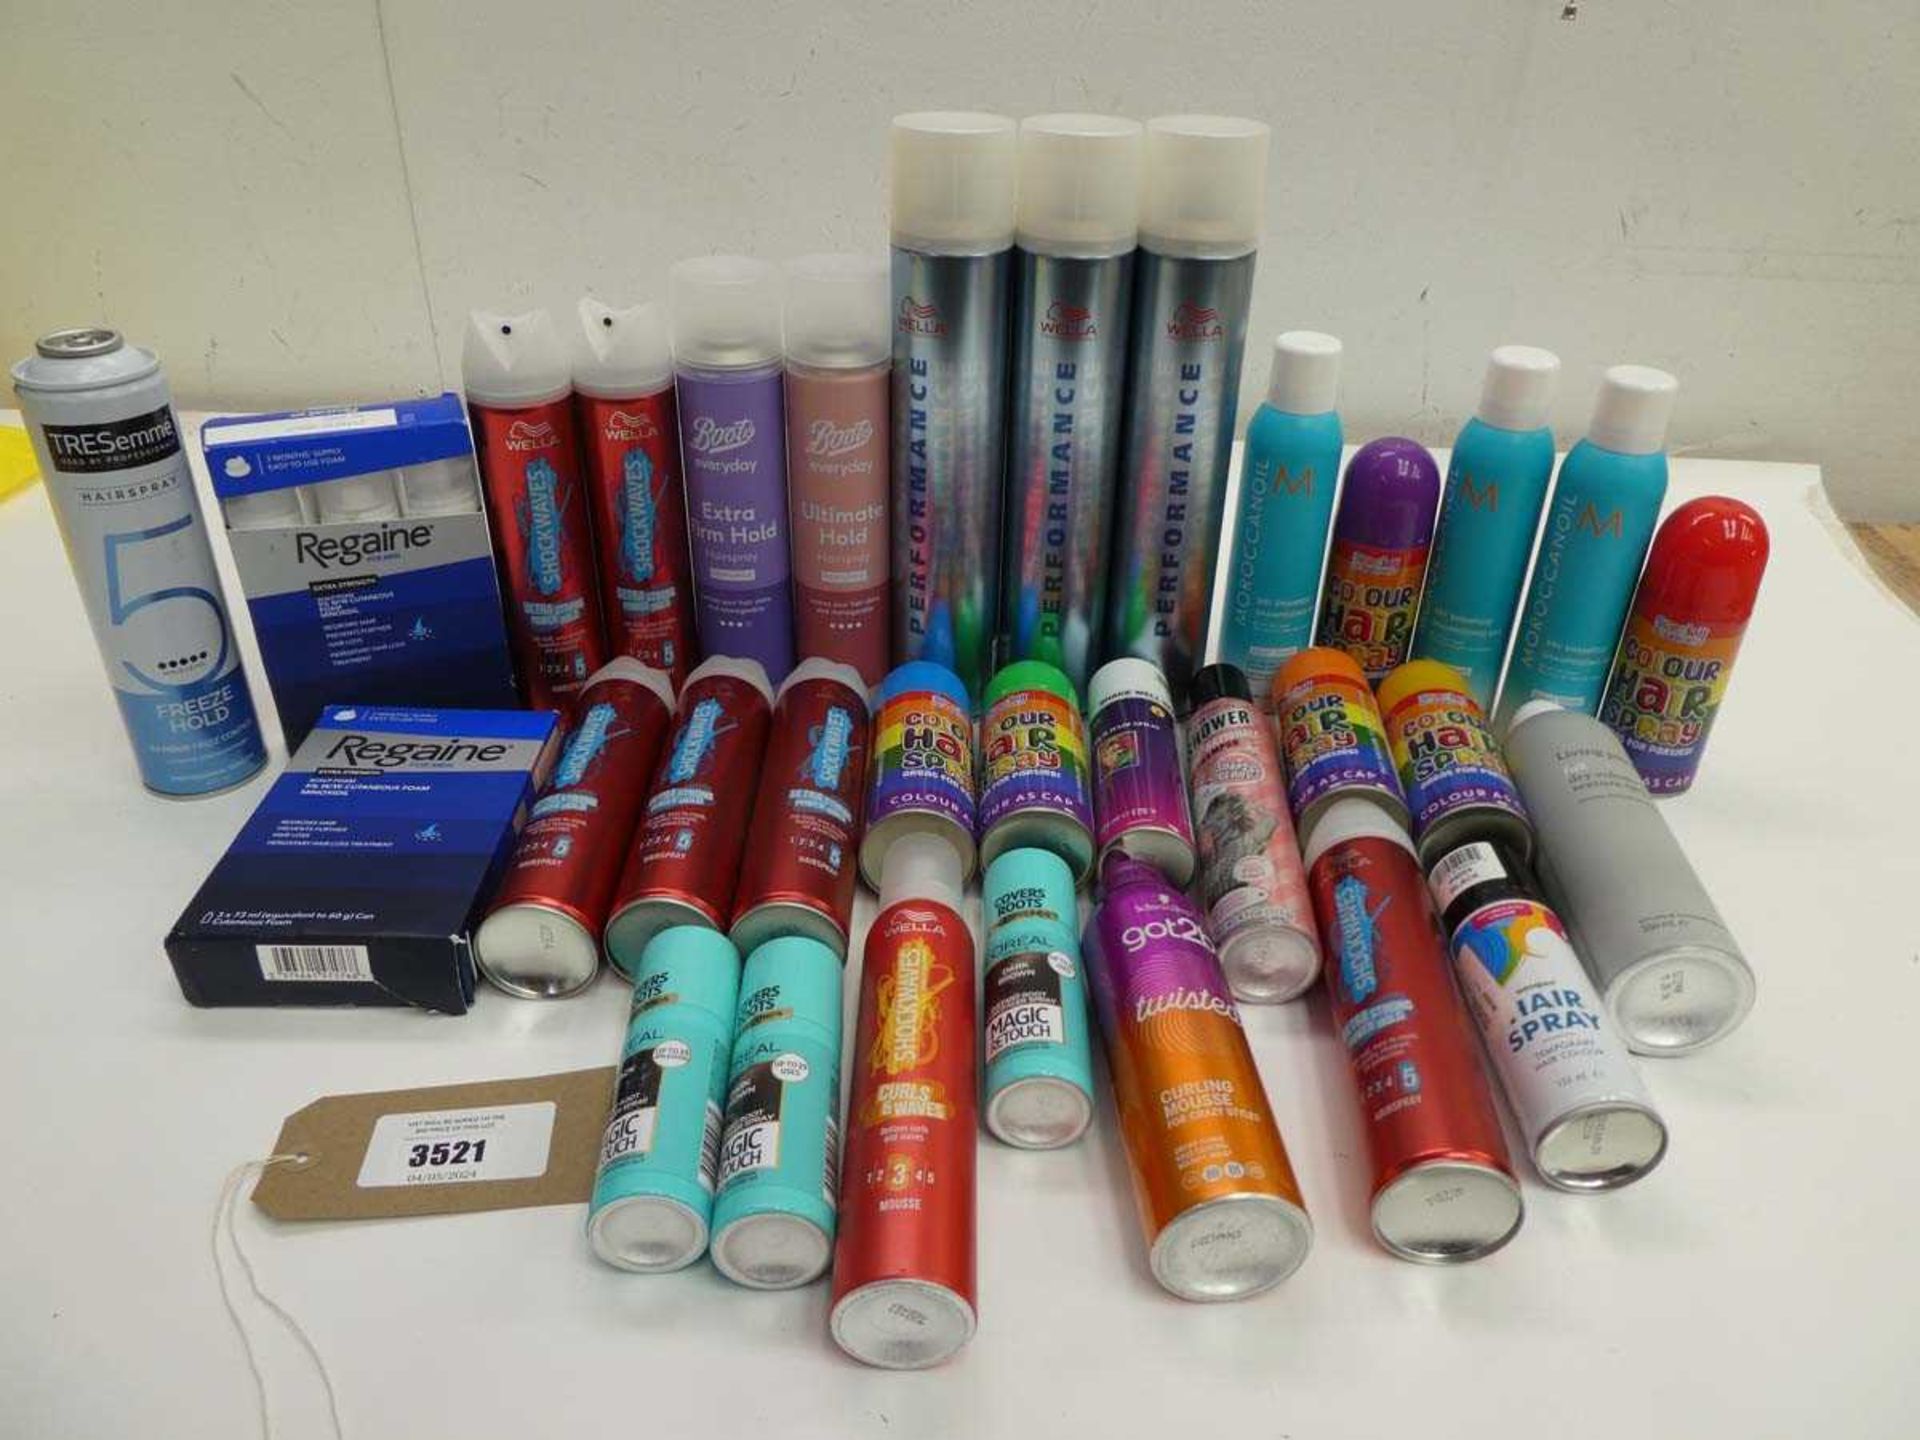 +VAT Hair spray, Dry shampoo, Regaine, Colour hair spray etc